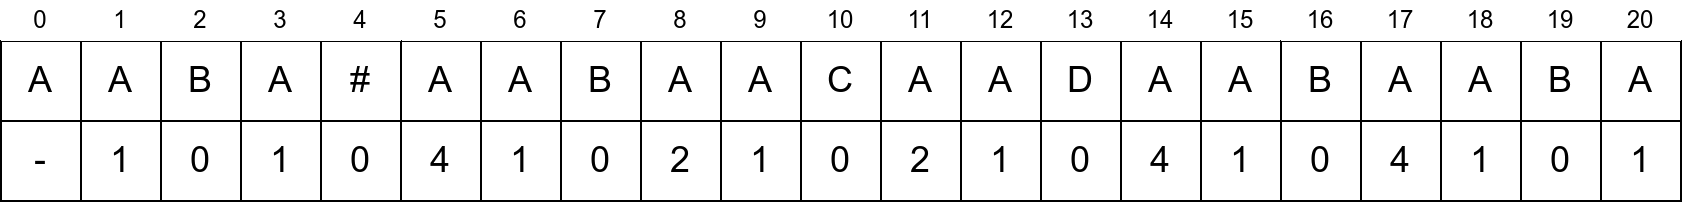 Slika 9: Traženje niske aaba u tekstu aabaacaadaabaaba korišćenjem z-niza.